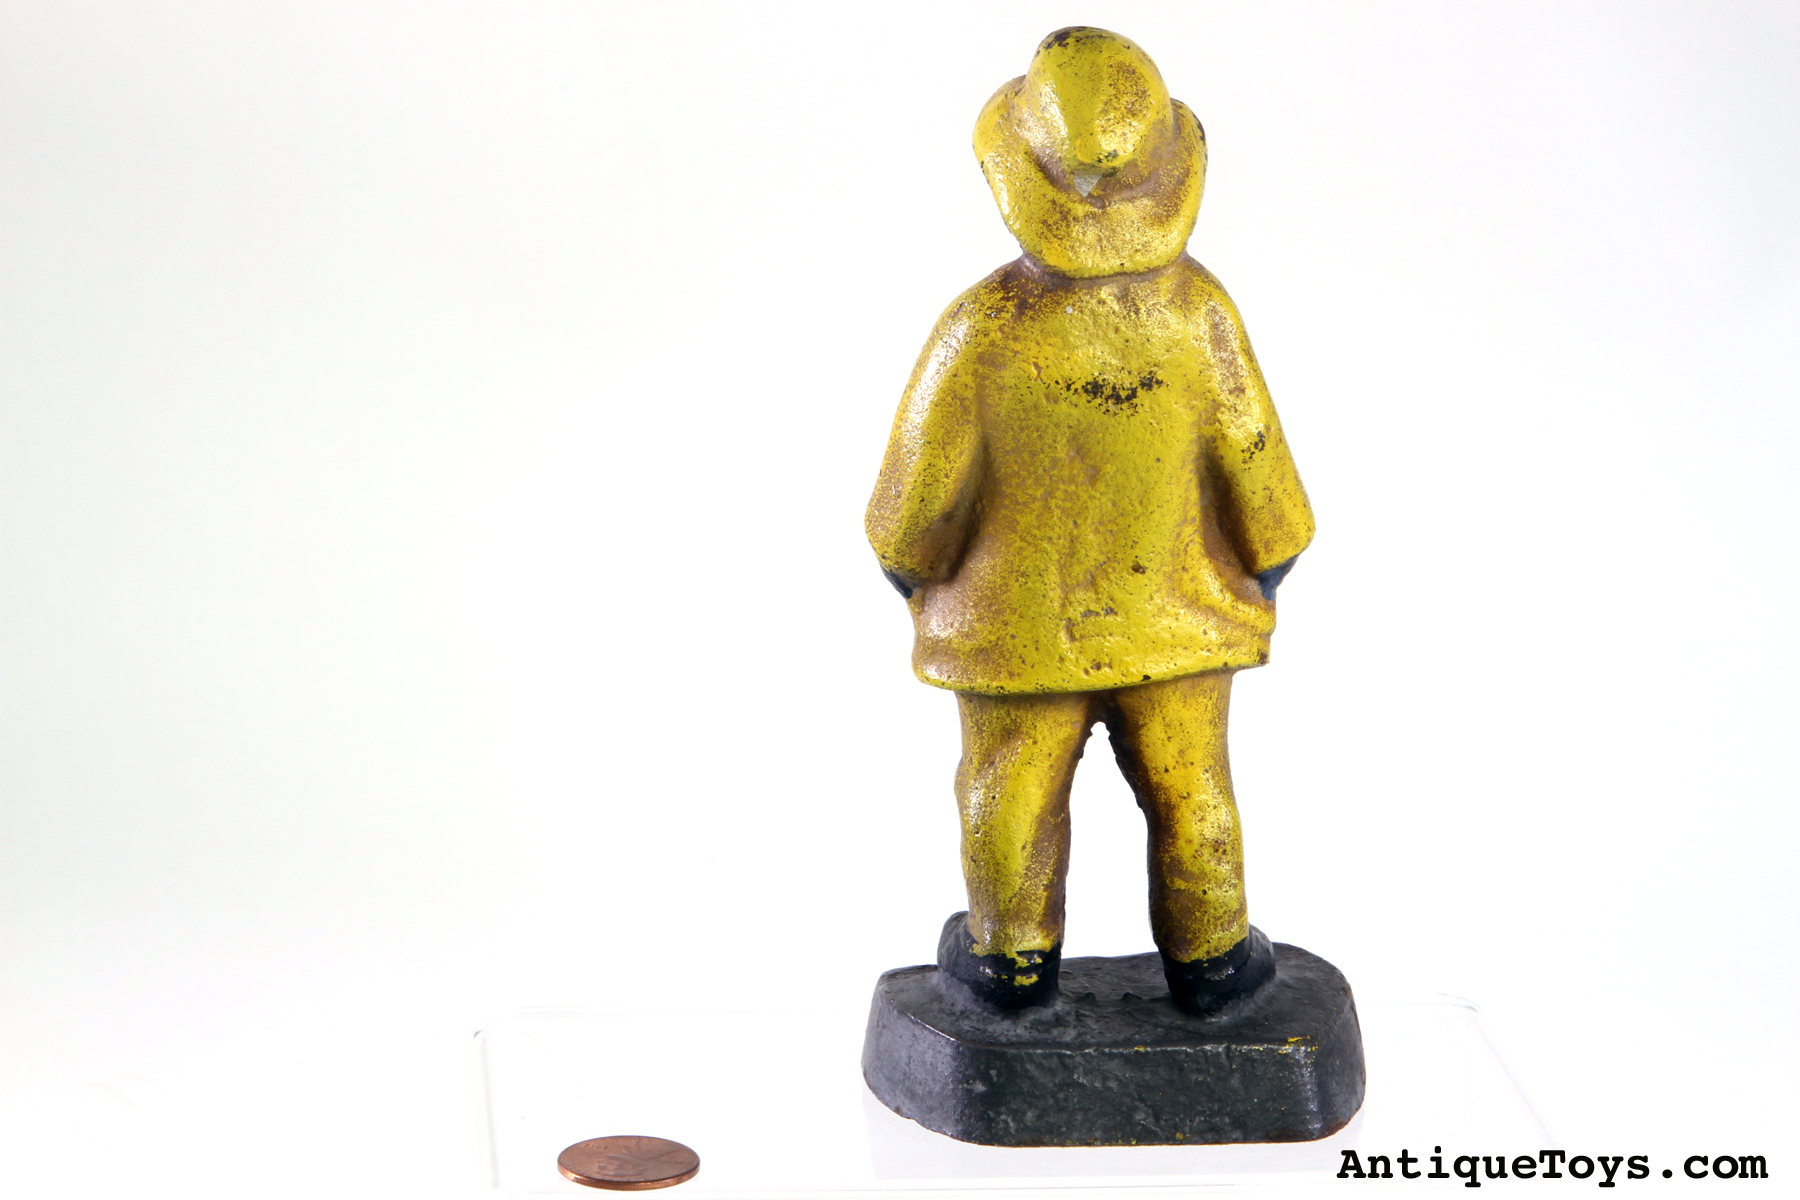 Old Salt Cast Iron Fisherman Statue - Antique Toys for Sale